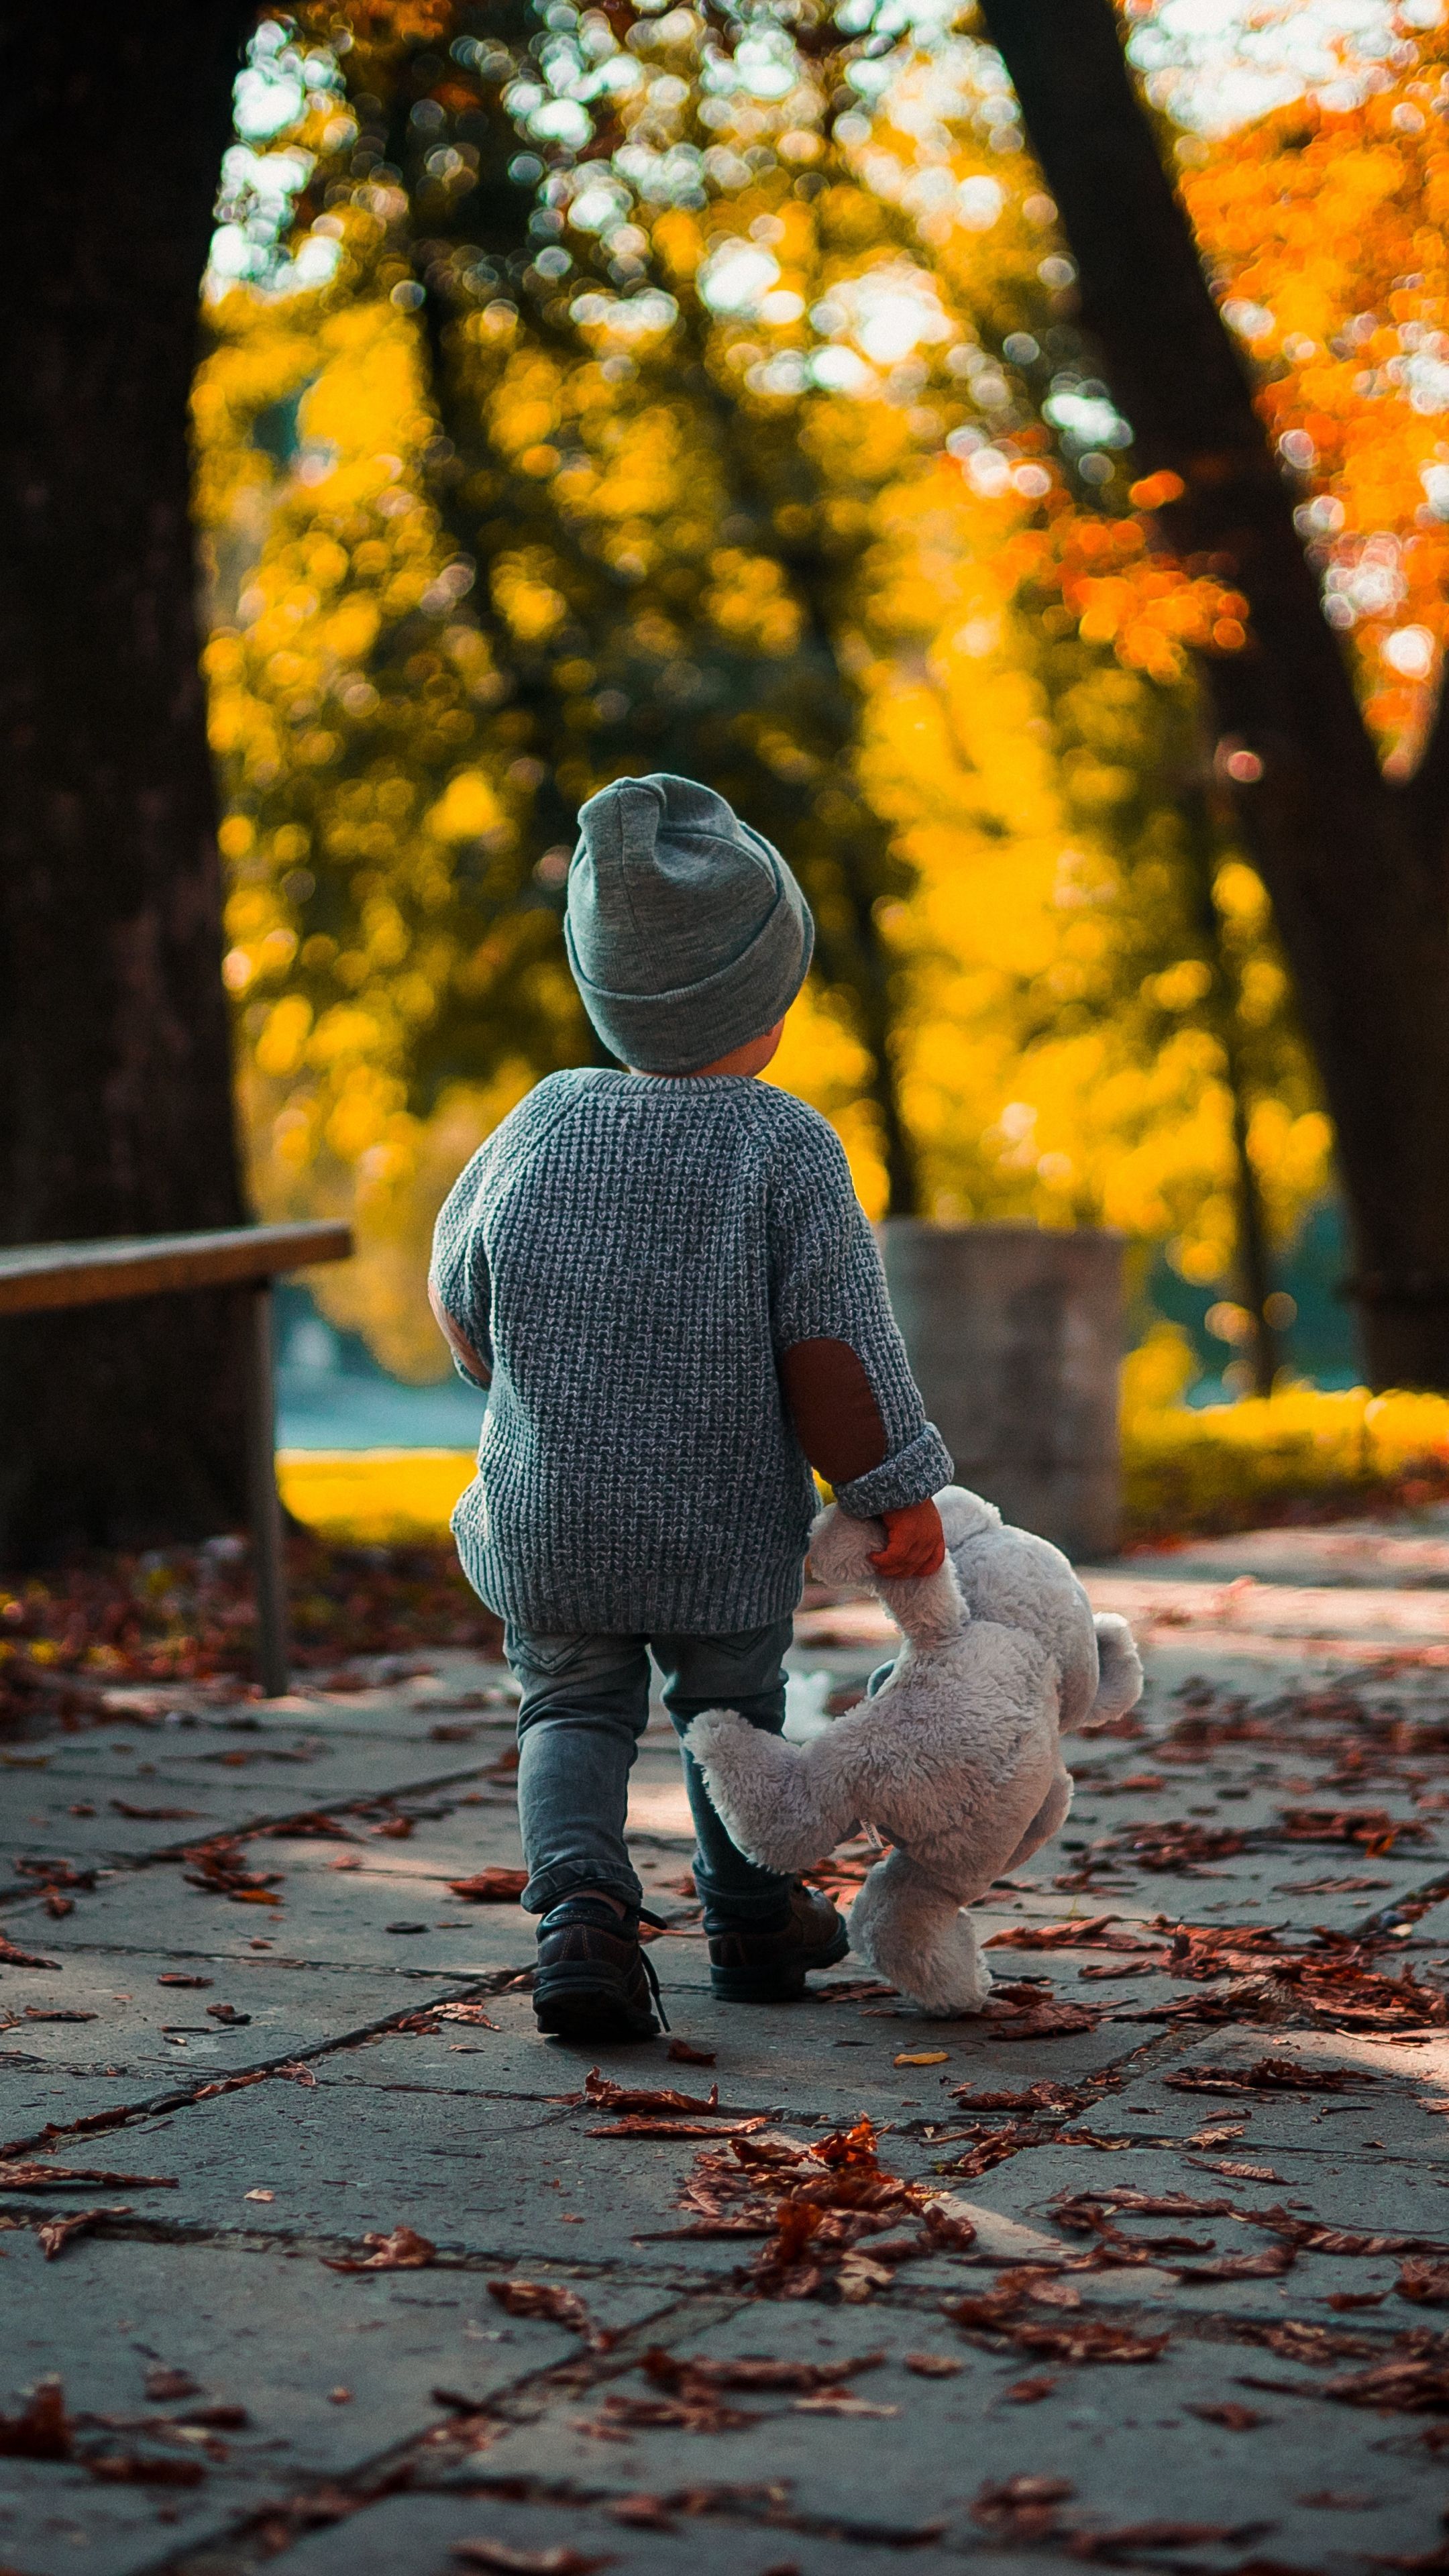 Children #child, #teddy #bear, #autumn #wallpaper HD 4k background for android :). Children photography, Background for photography, Happy photography